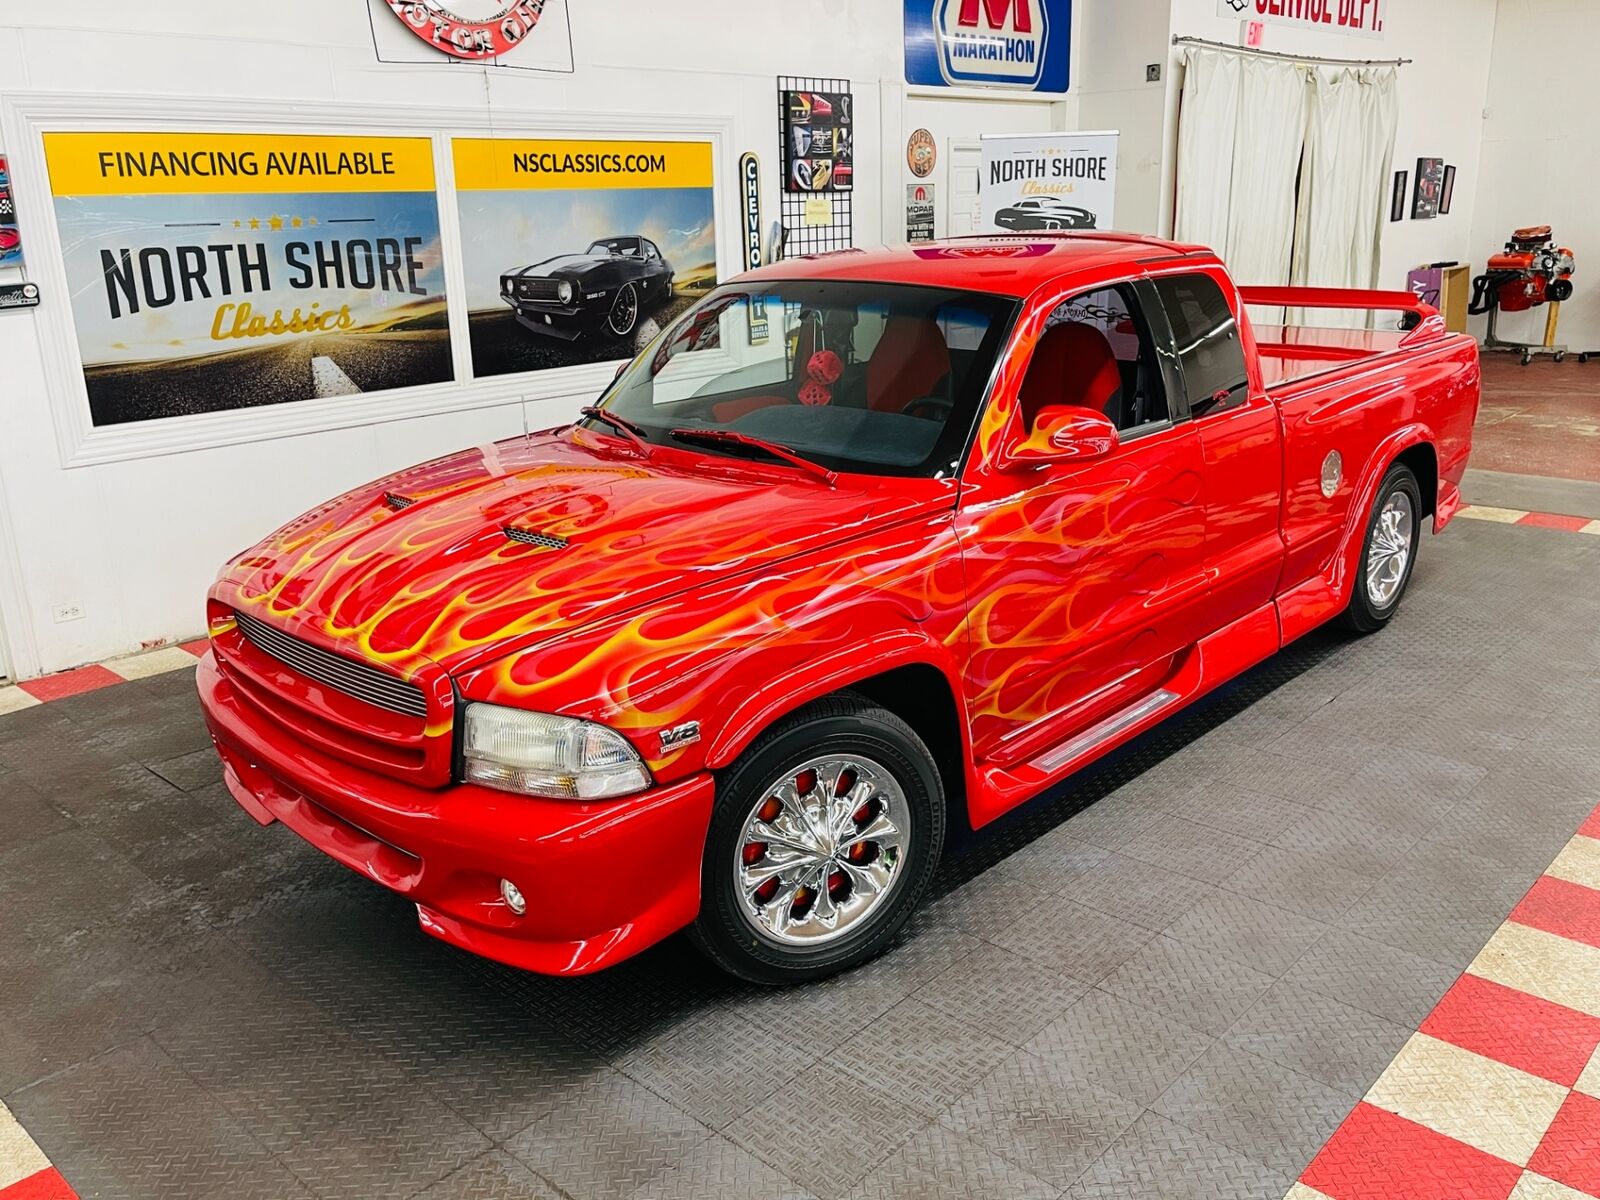 1999 Dodge Dakota - R/t Sport - Custom Paint - California Truck - Se 1999 Dodge Dakota, Red With 43,300 Miles Available Now!